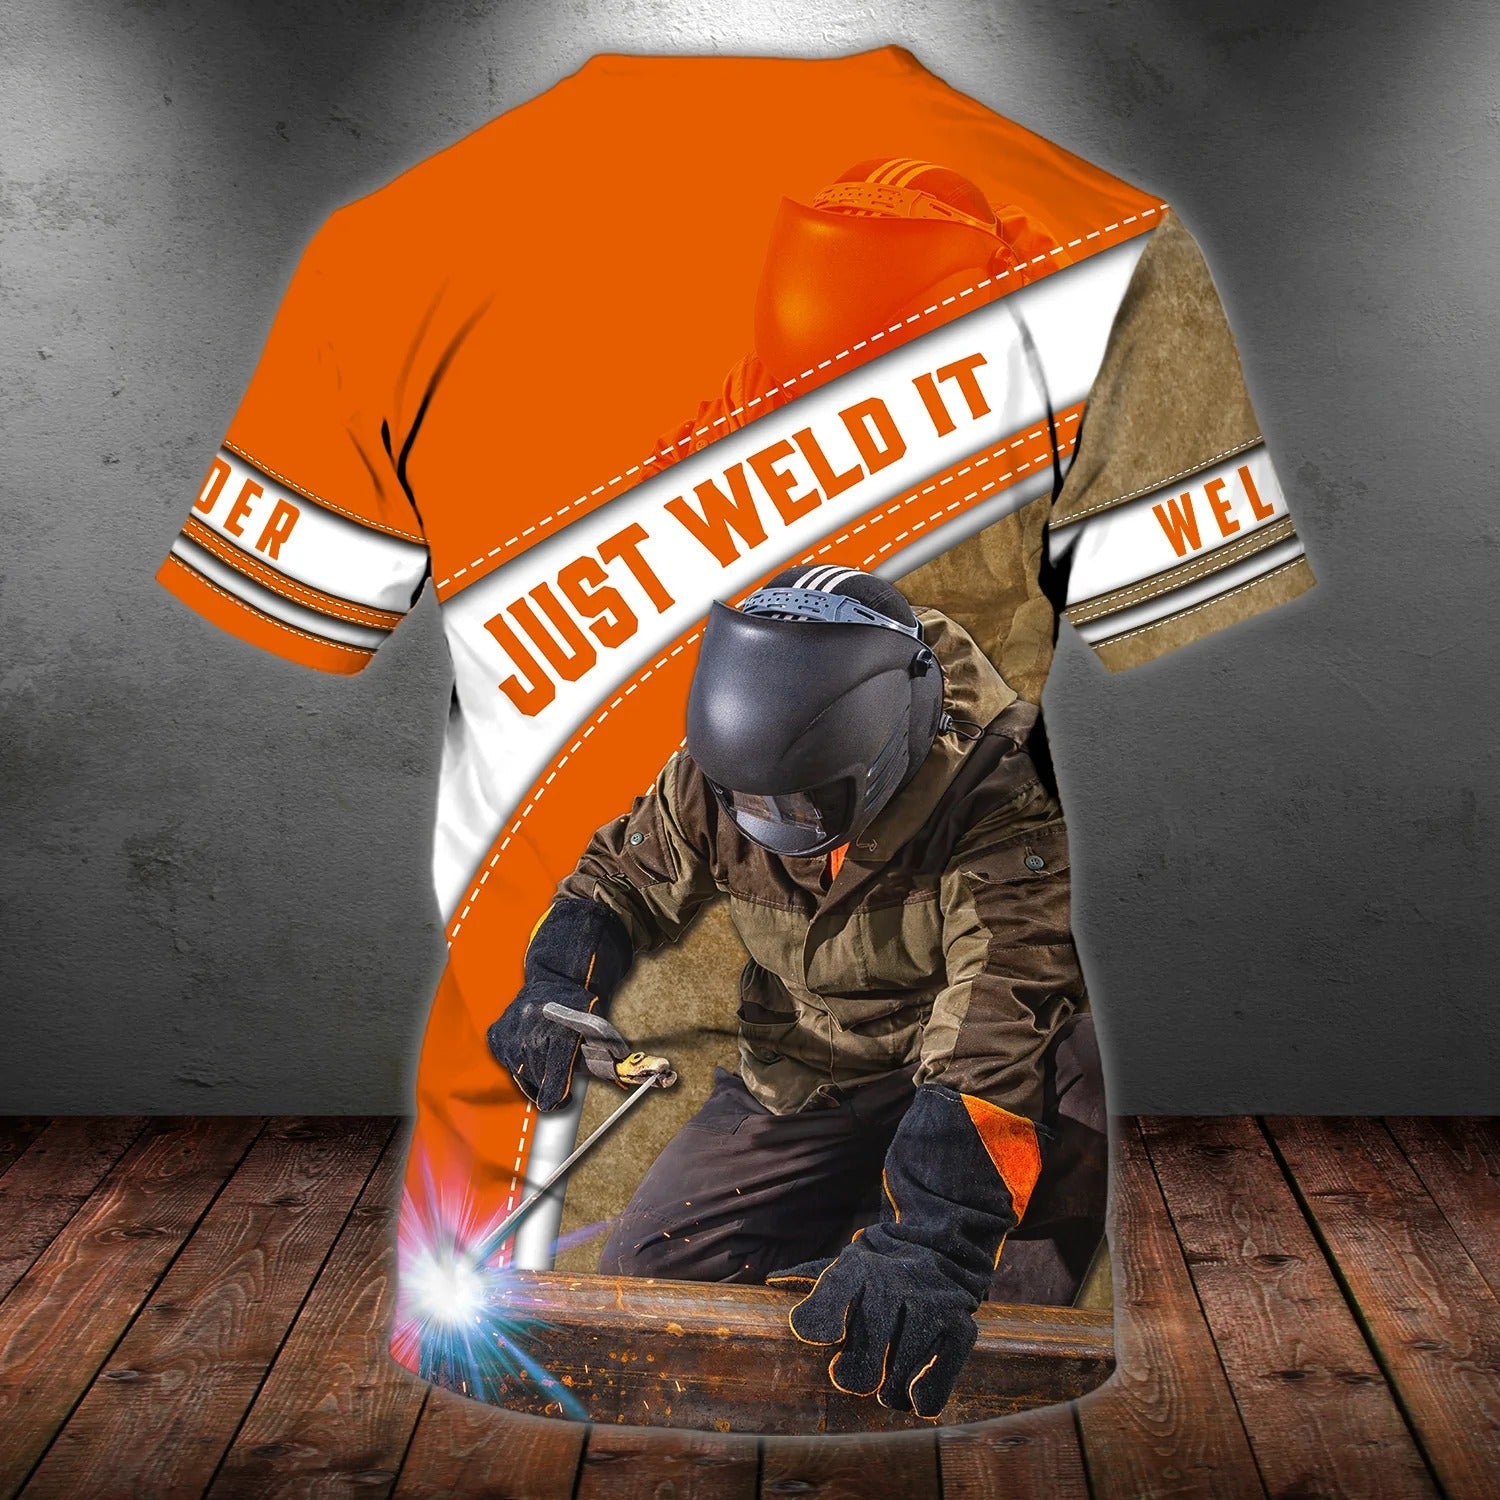 Personalized Welder Shirt/ 3D All Over Print Welder Man Tshirt/ Just Weld It/ Welder Gift